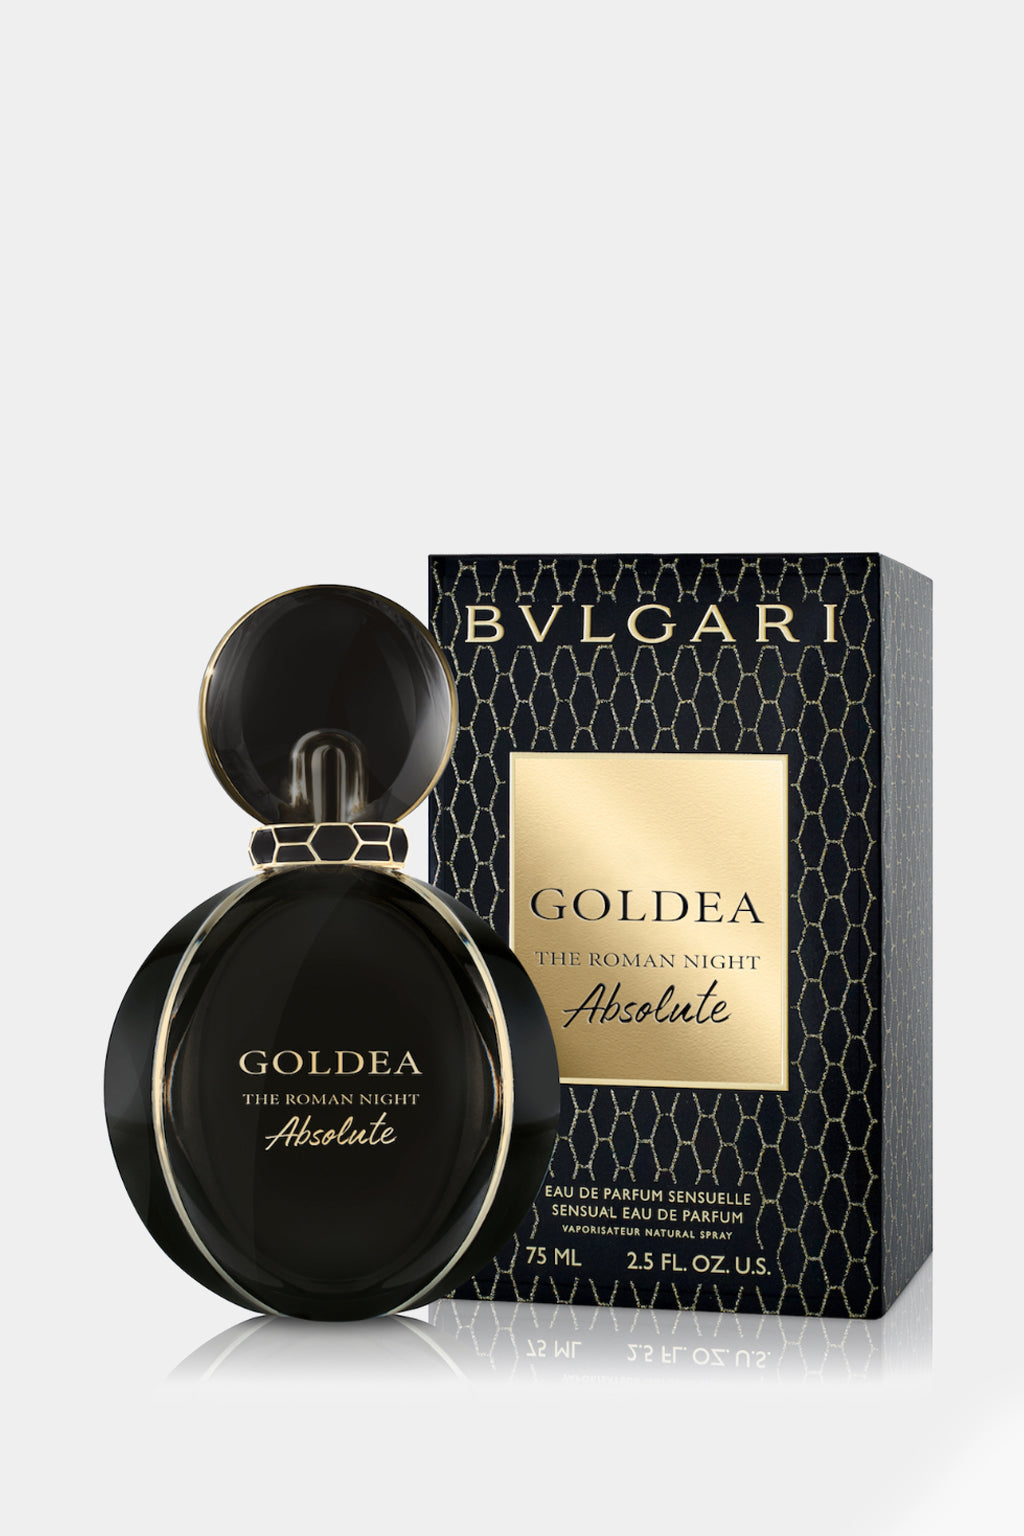 Bvlgari - Goldea The Roman Night Eau de Parfum